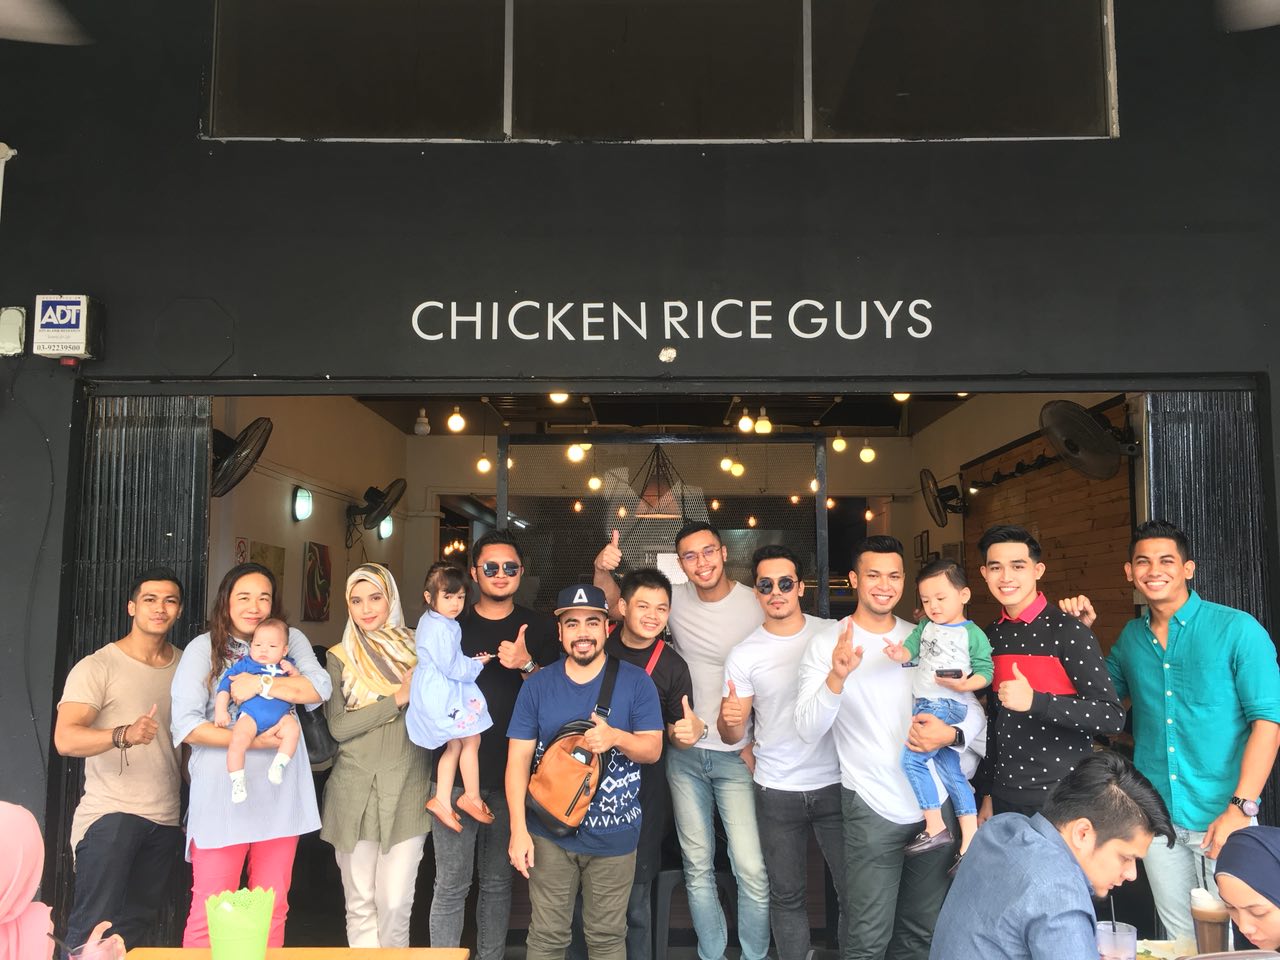 Crg chicken rice guys